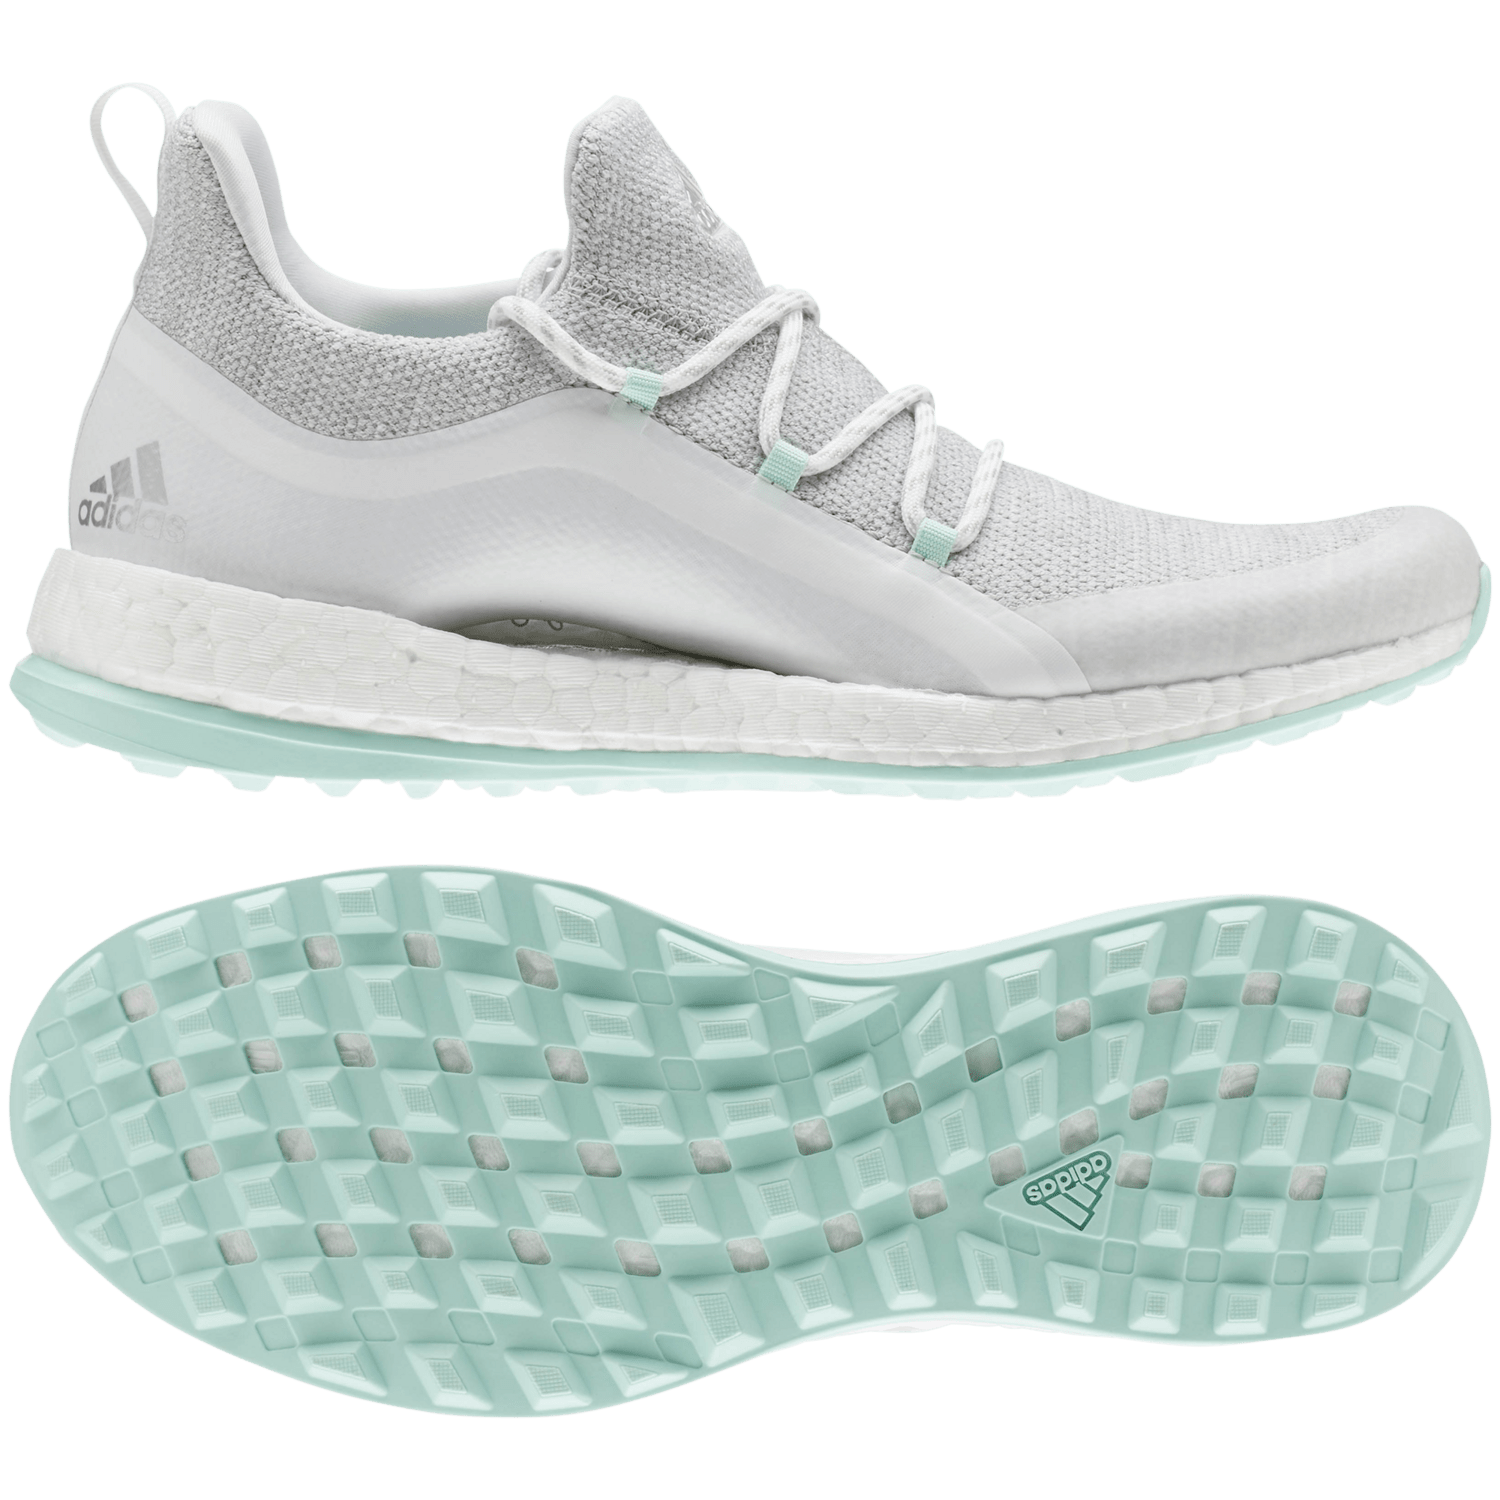 adidas pureboost golf shoes